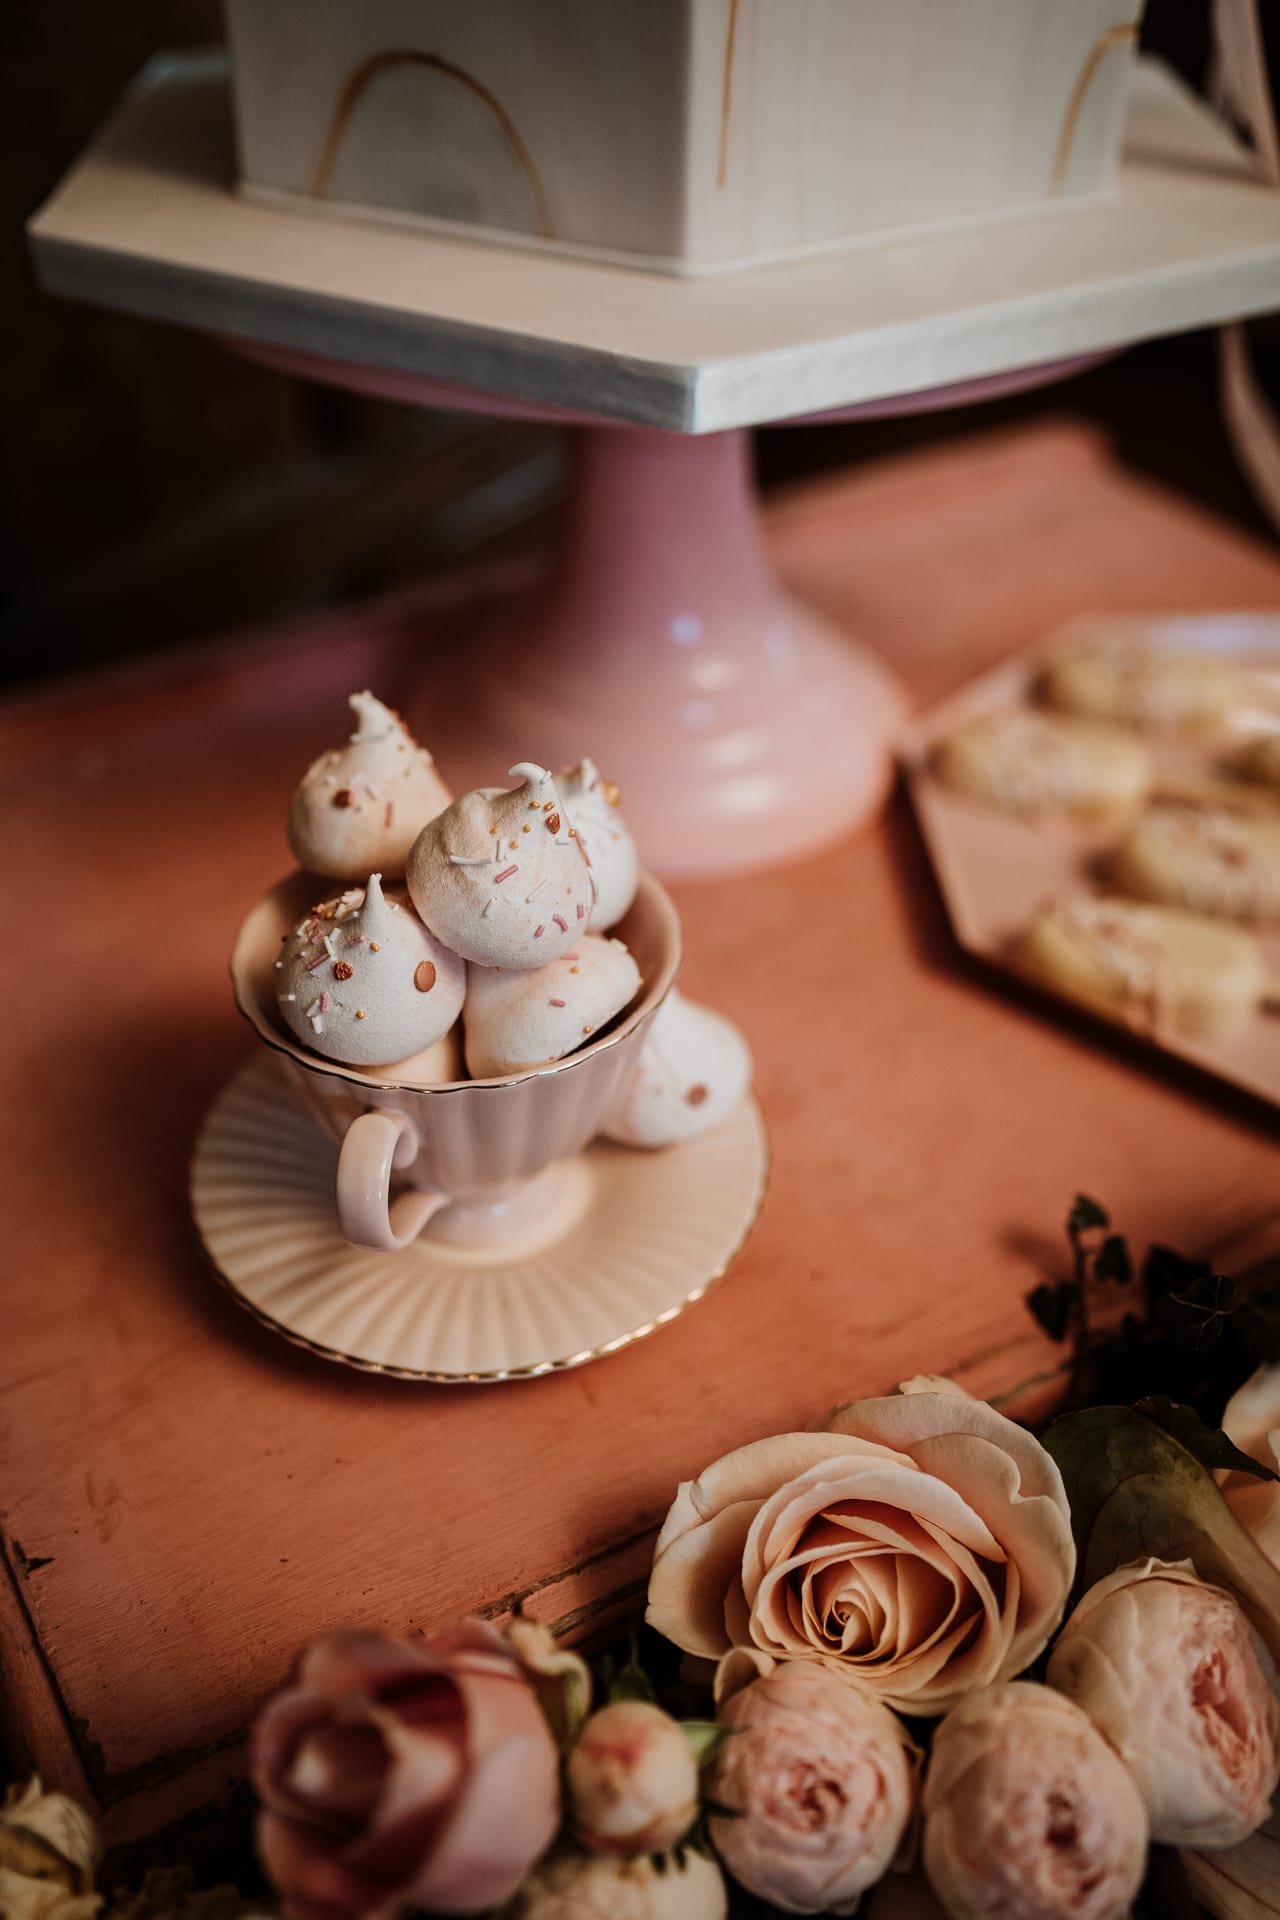 Meringue kisses in pink cup on dessert table